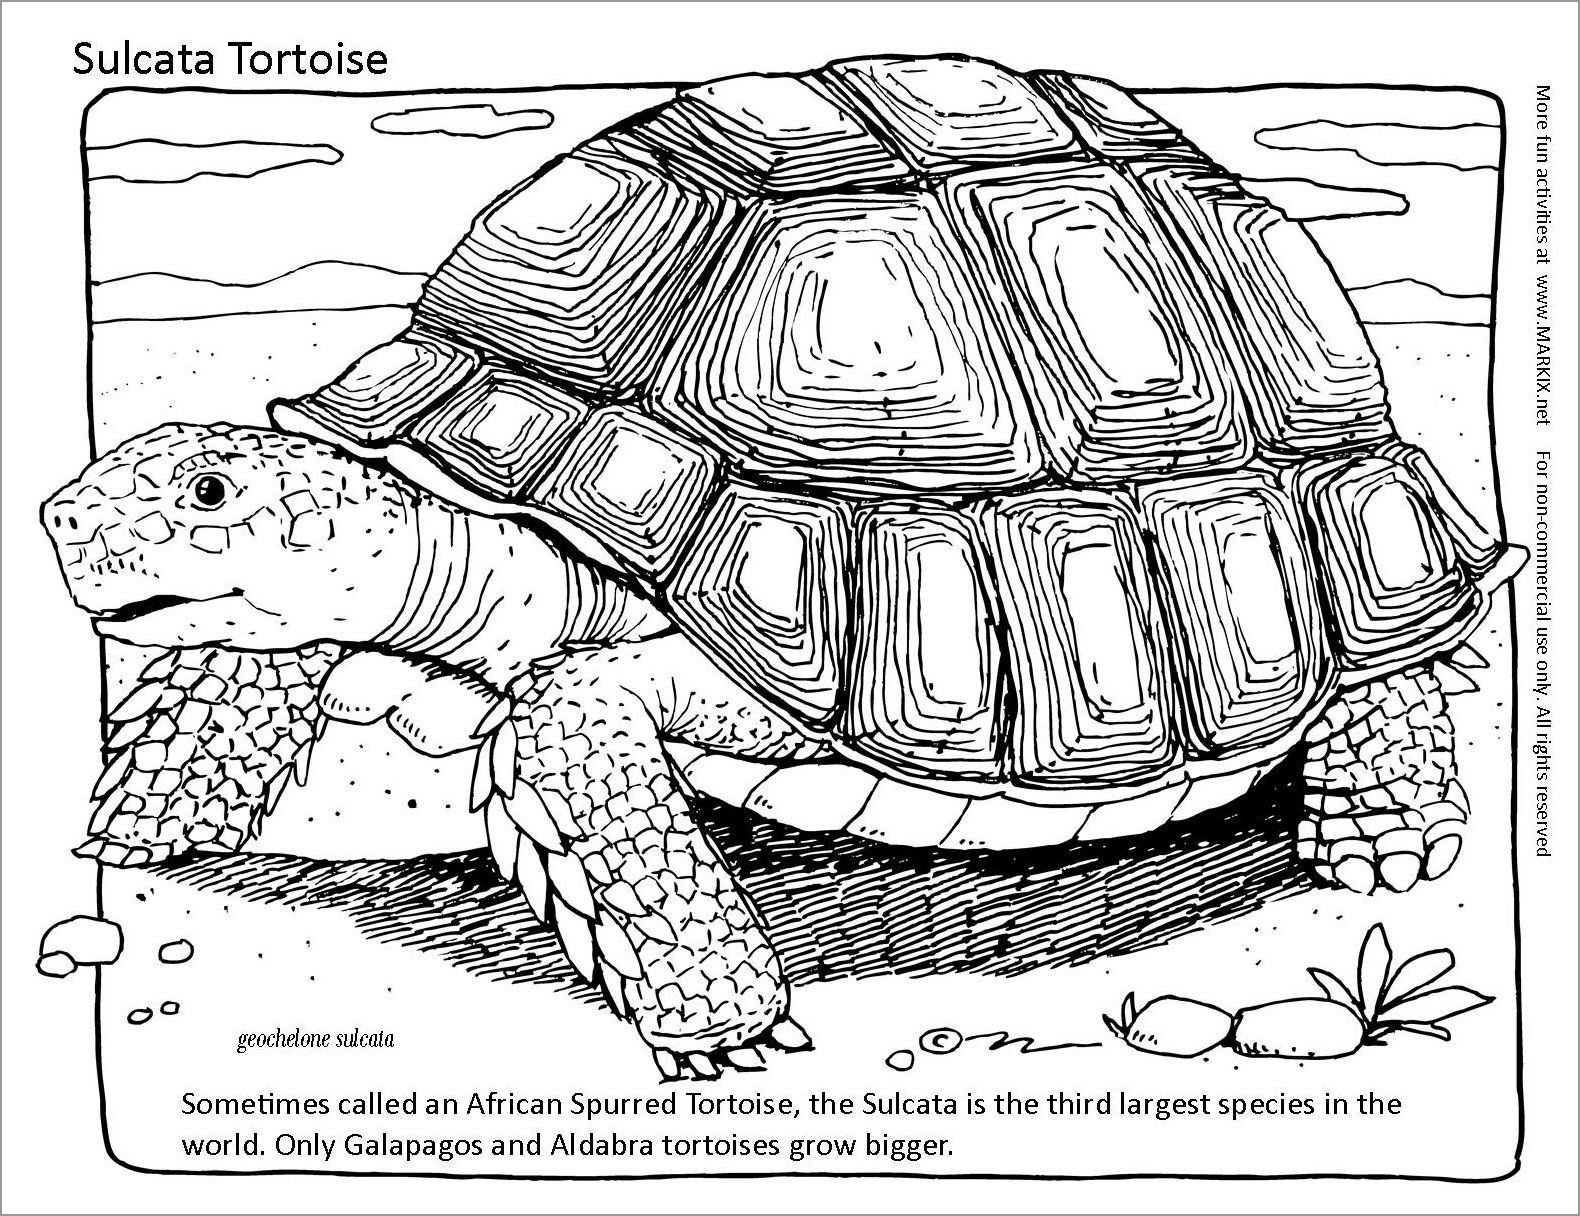 Sulcata tortoise Coloring Page